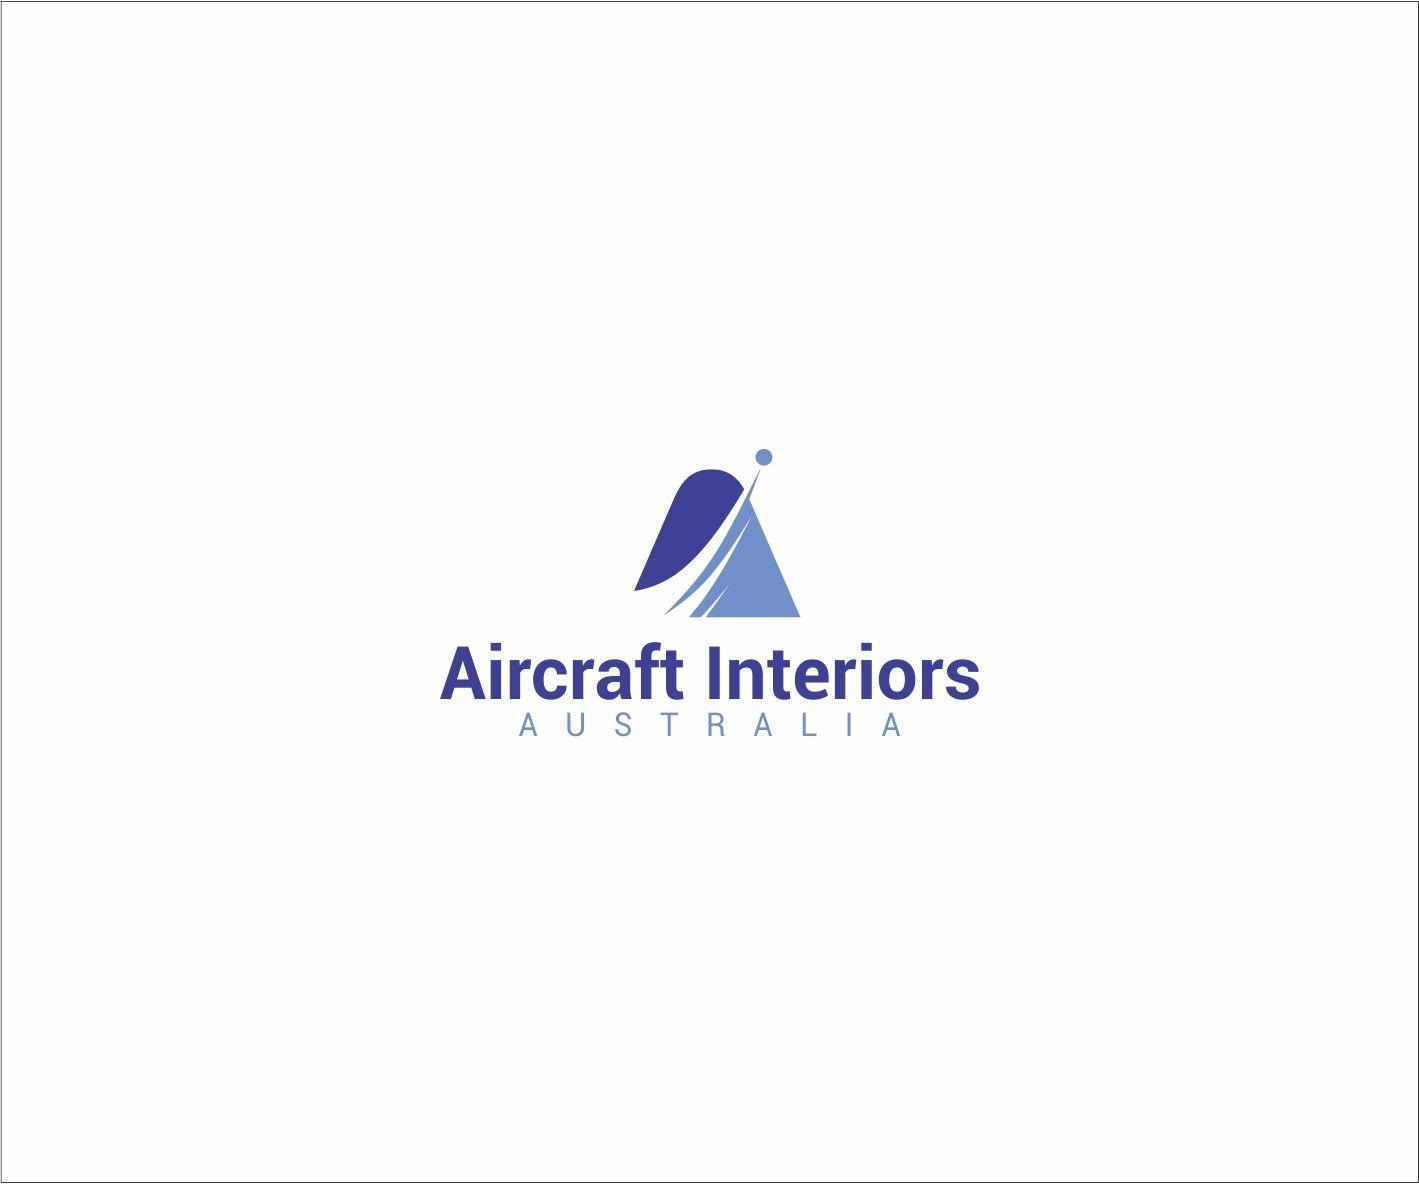 Aircraft Company Logo - Professional, Serious, It Company Logo Design for Aircraft Interiors ...